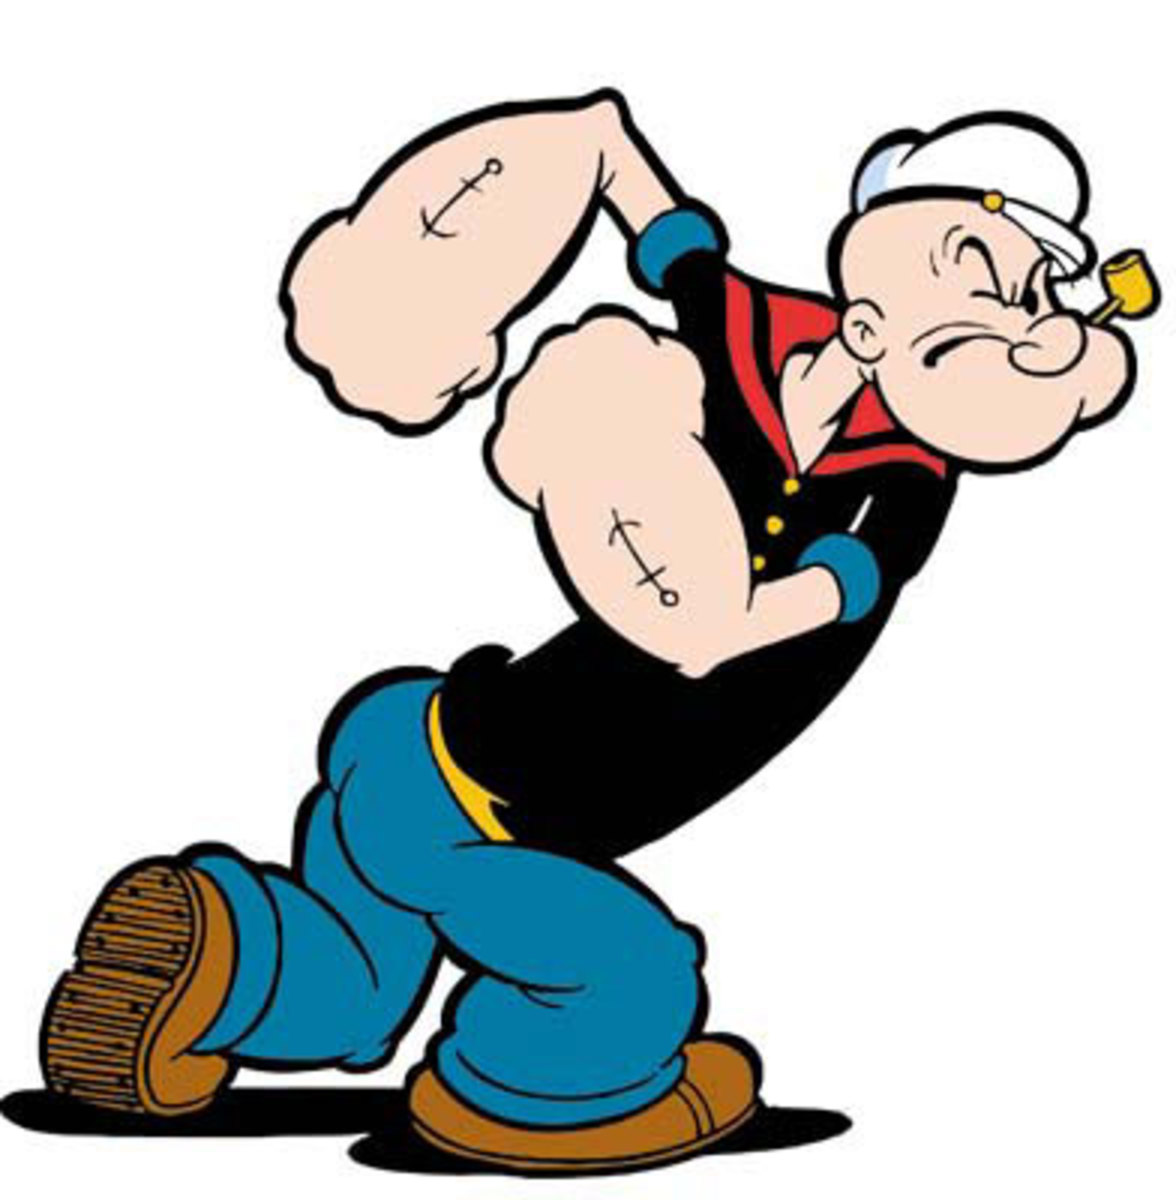 Popeye the sailor man